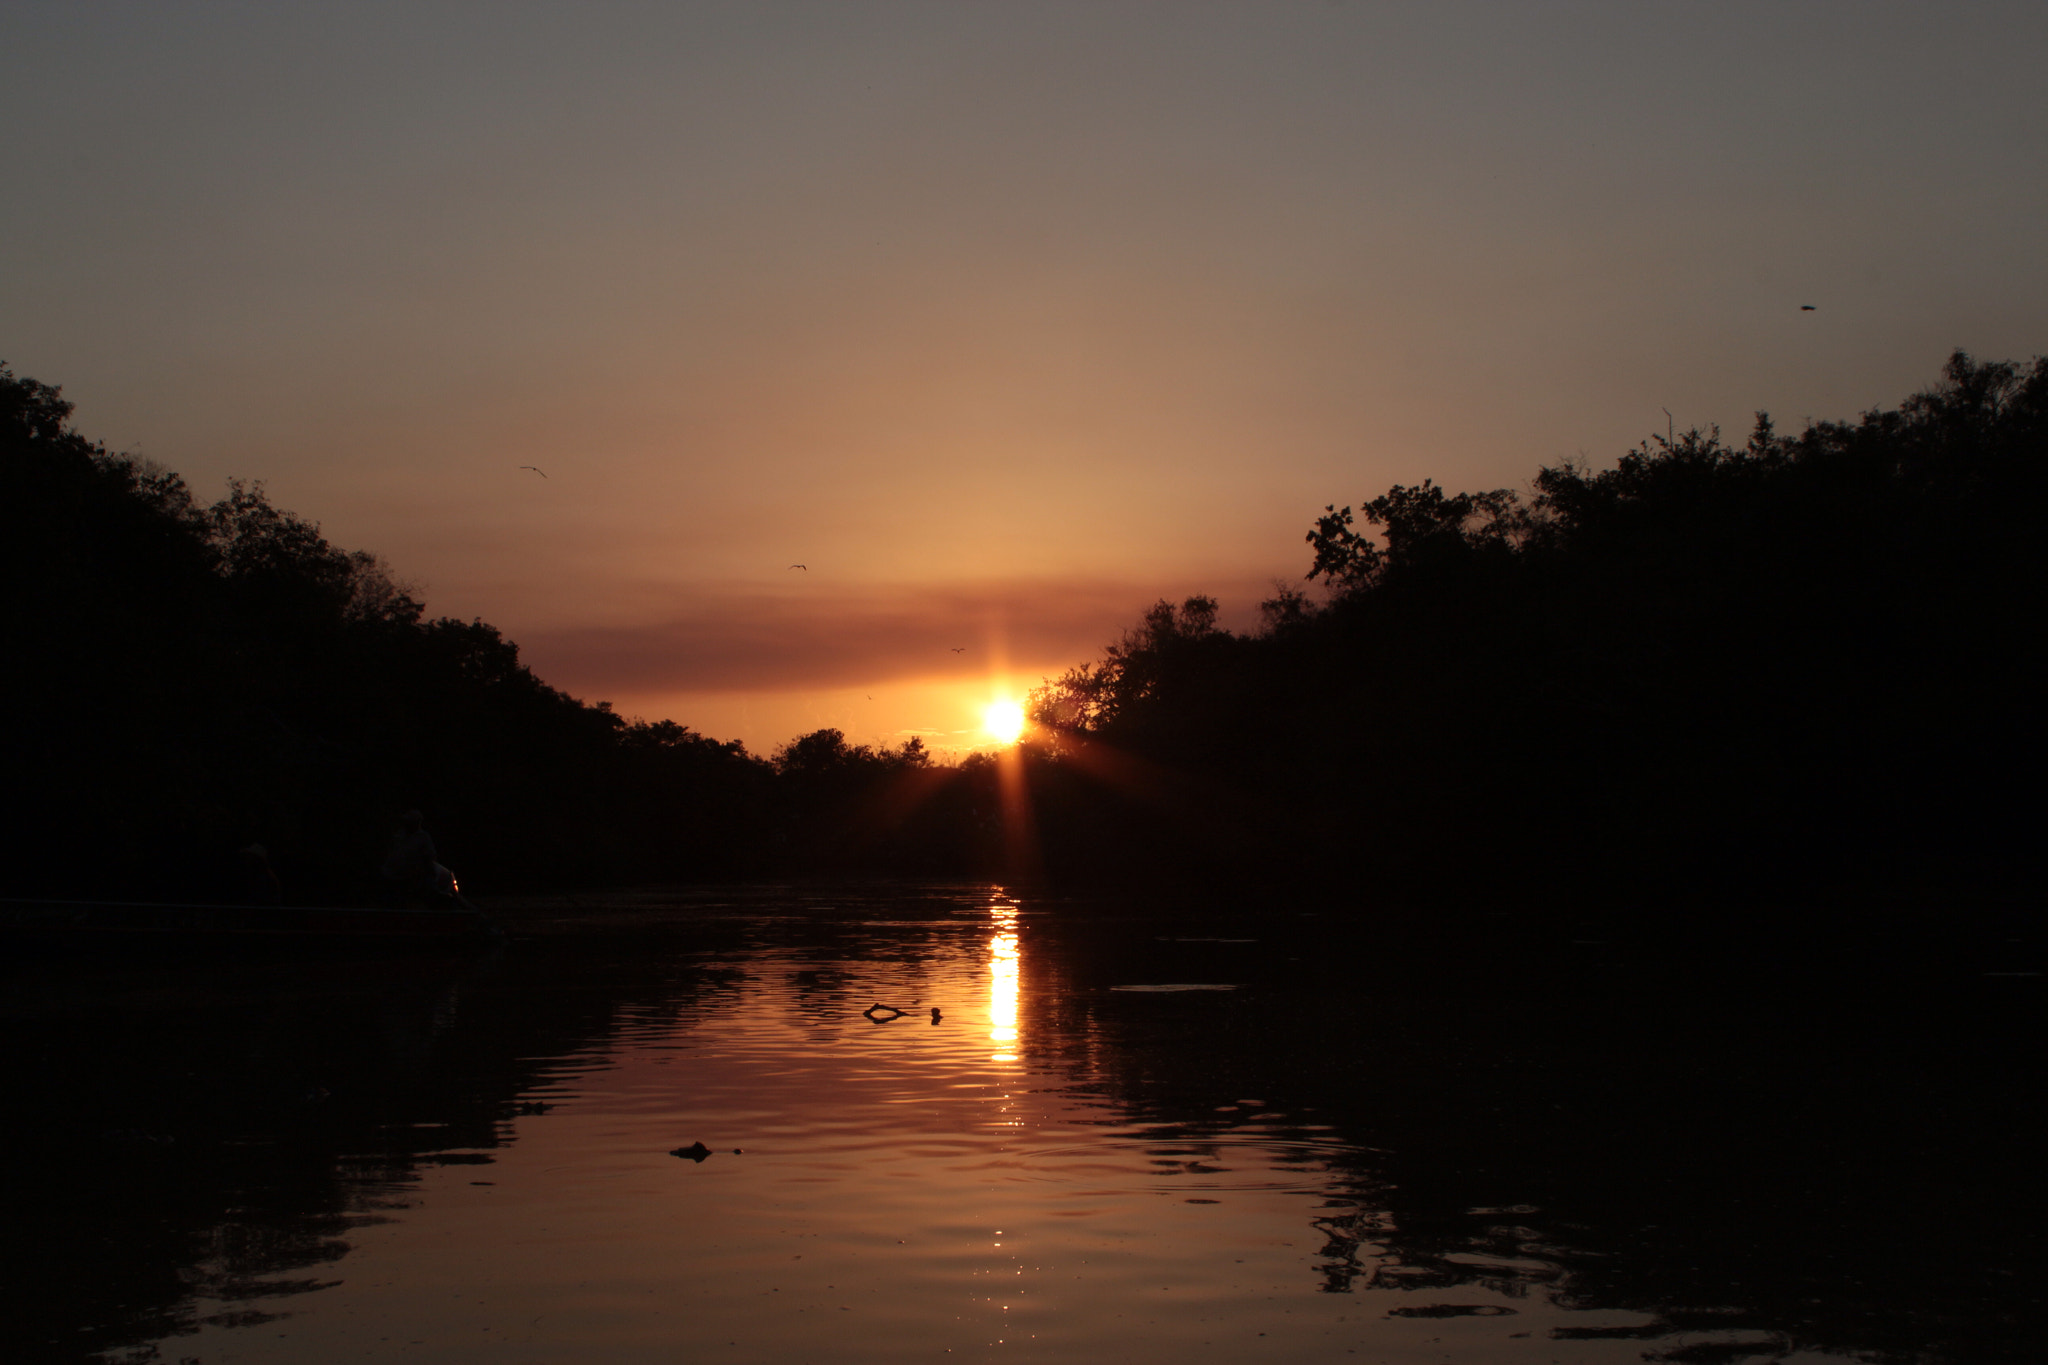 Sunset at the matiyure river